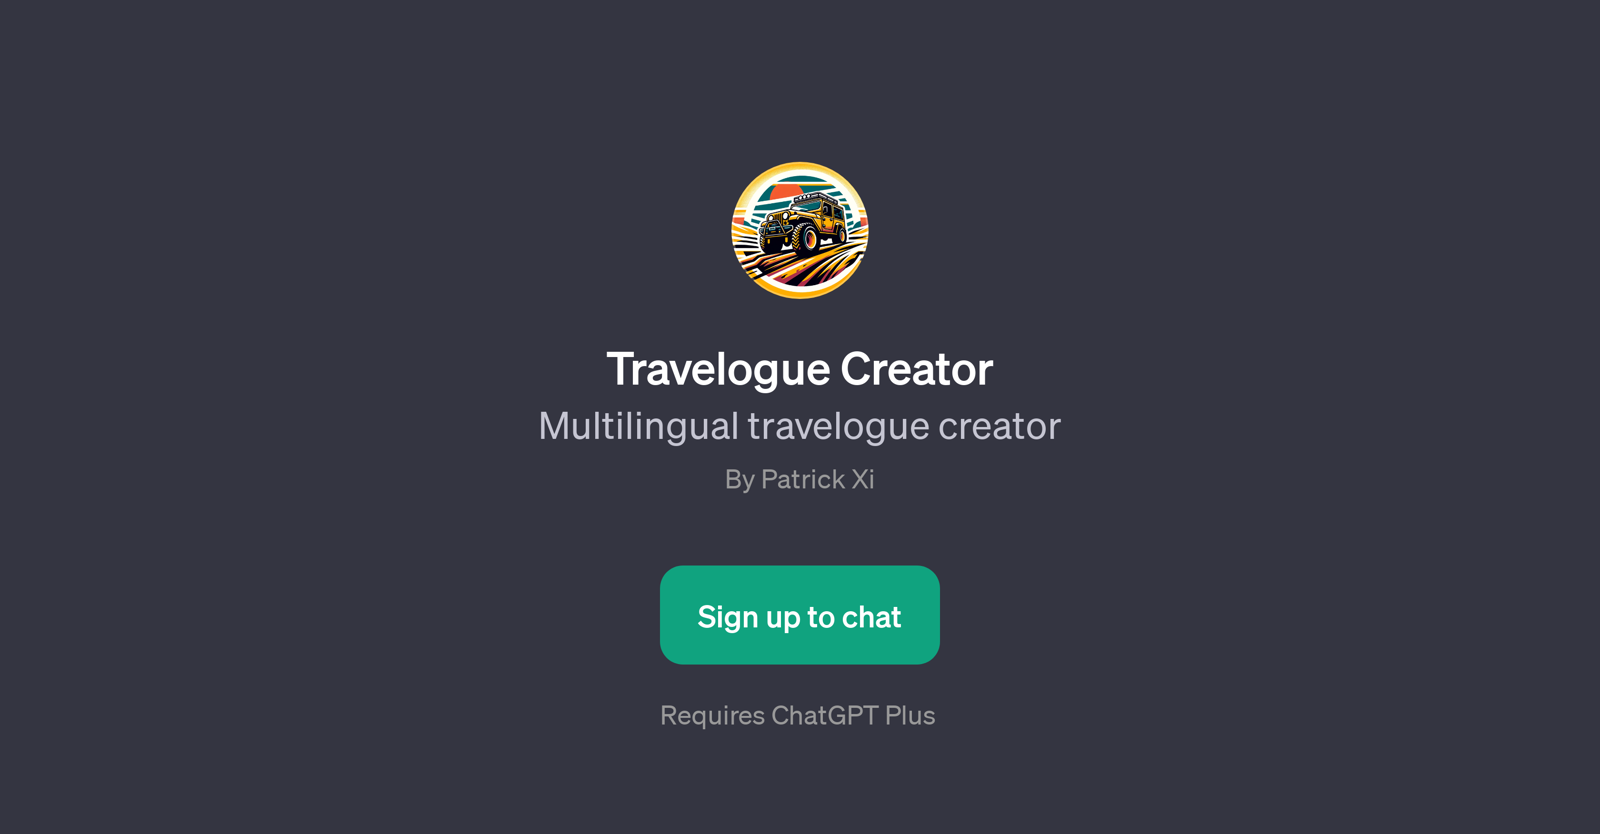 Travelogue Creator website